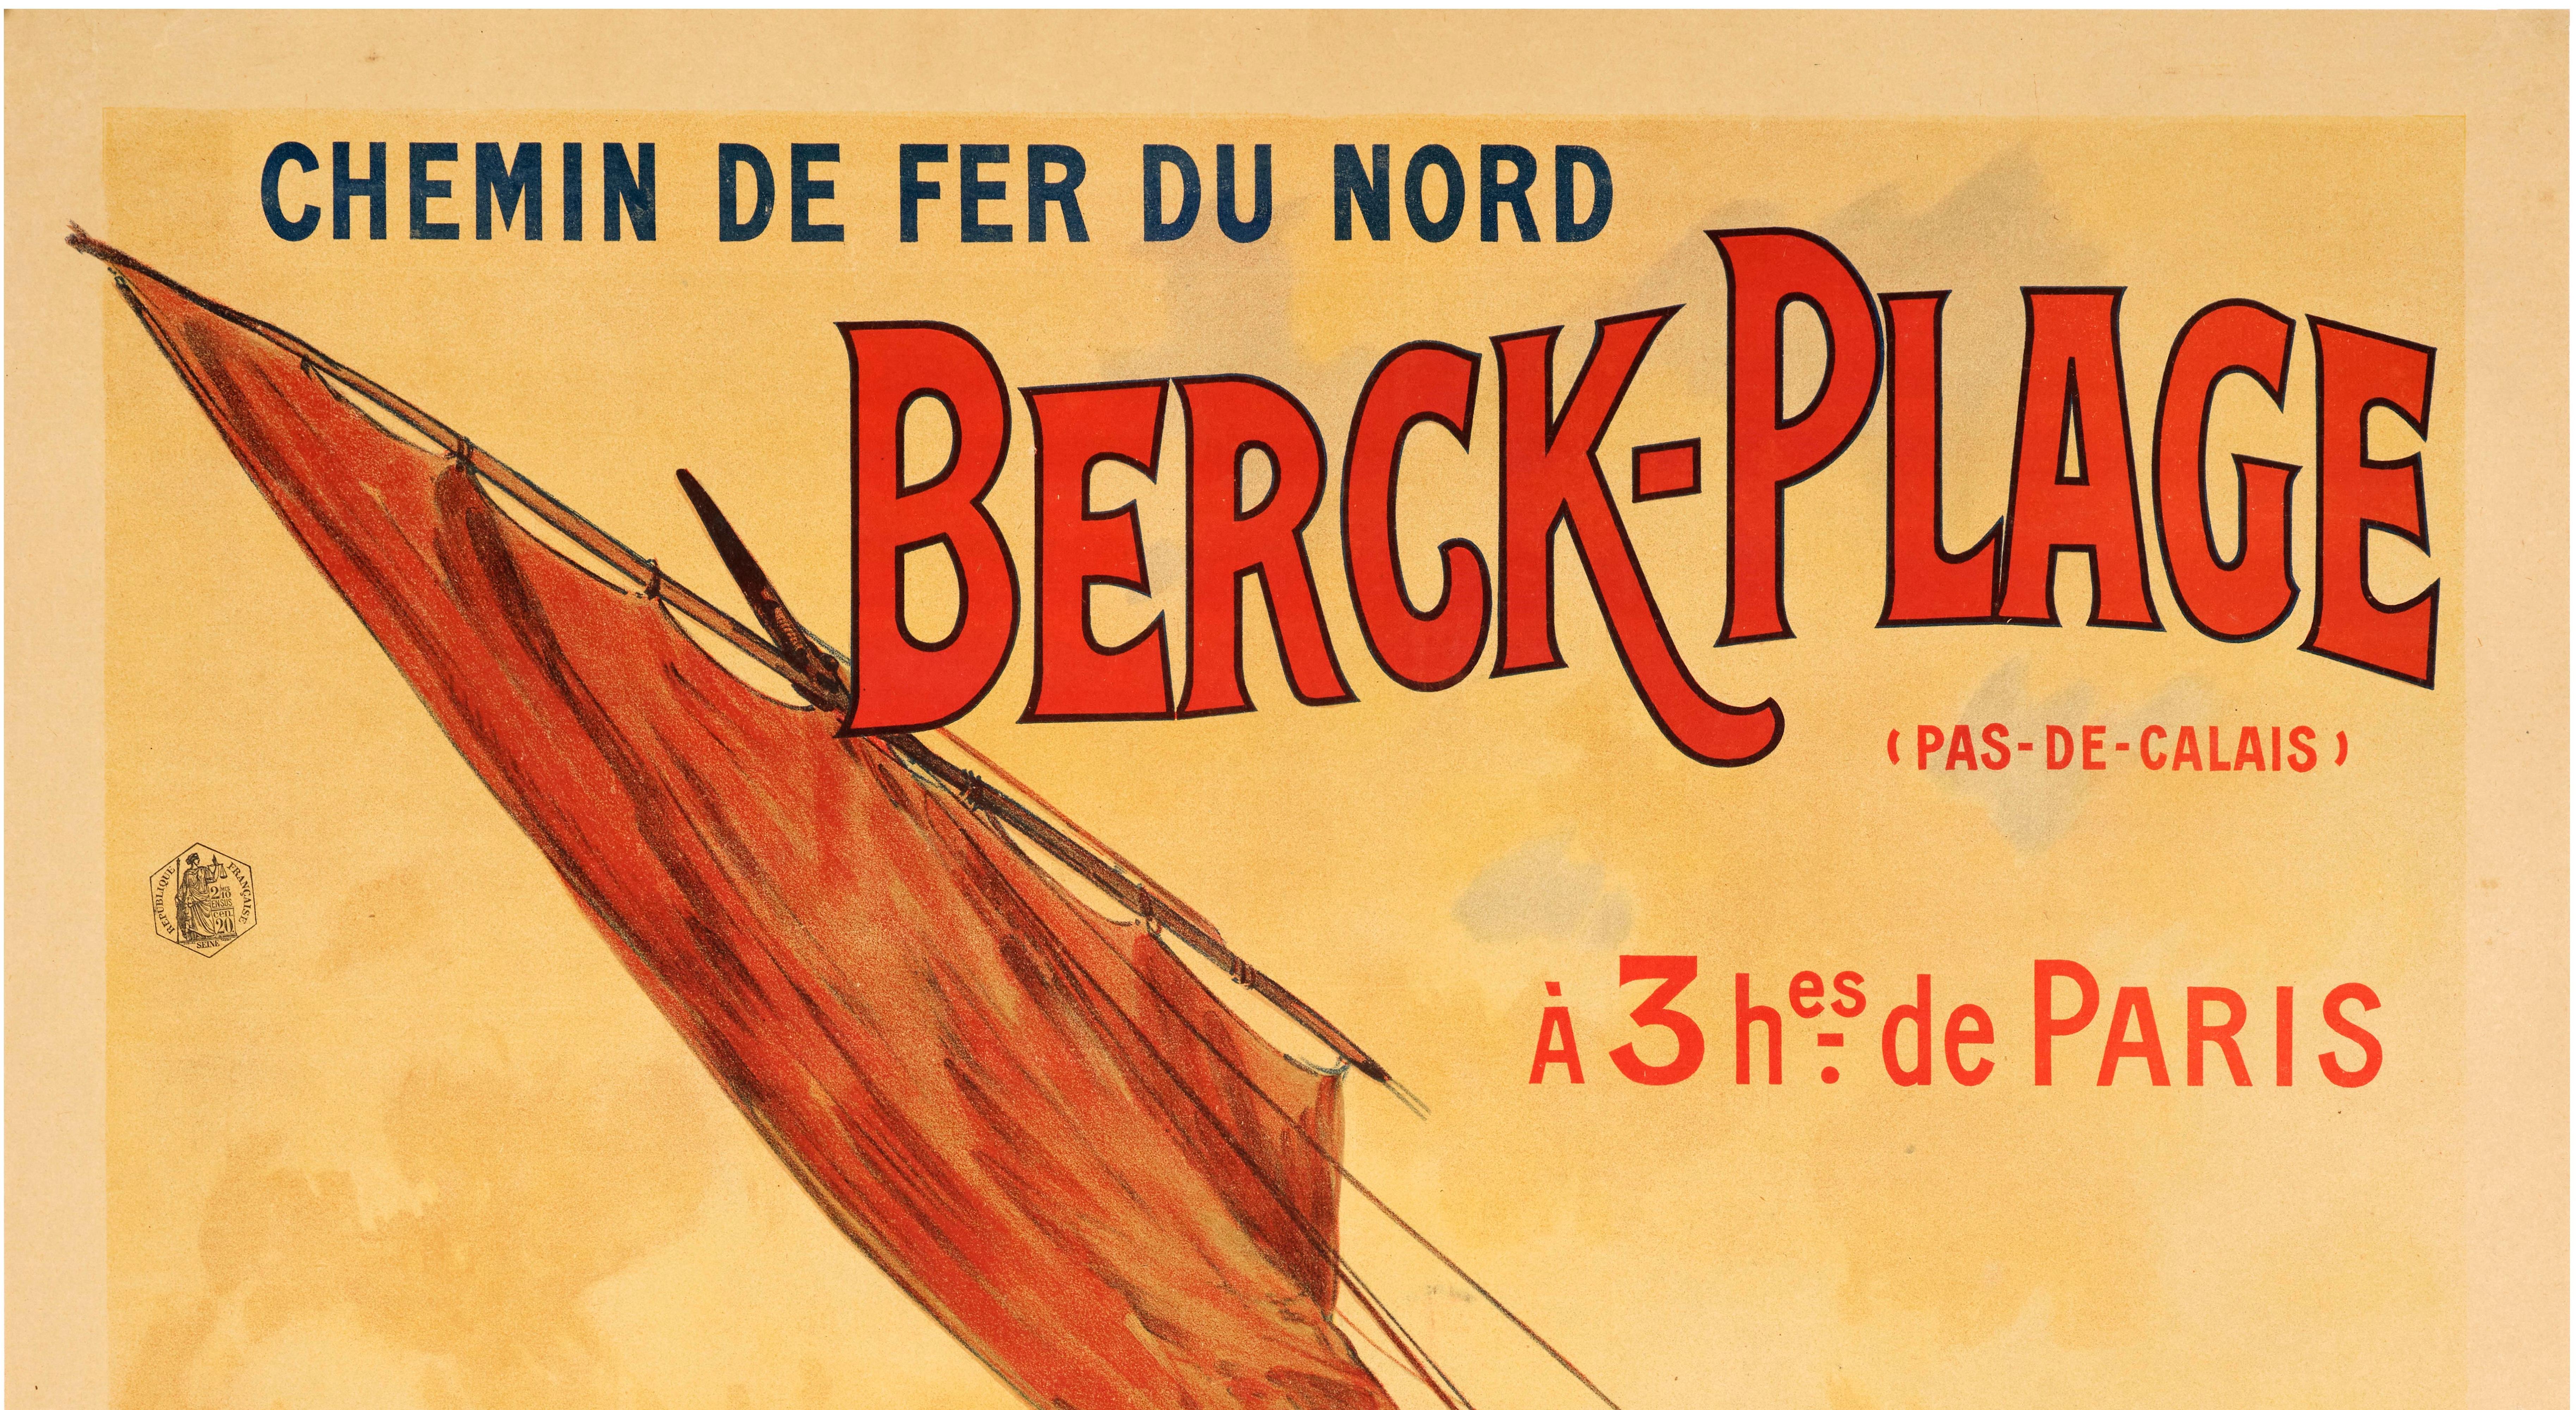 Poster for the Chemins de Fer du Nord produced by Louis Tauzin in 1905 to promote tourism to Berck Plage (Pas-de-Calais) 3 hours from Paris.

Artist: Louis Tauzin (1842-1915)
Title: Berck Plage – Chemins de fer du Nord
Date: 1905
Size: 29.6 x 40.8